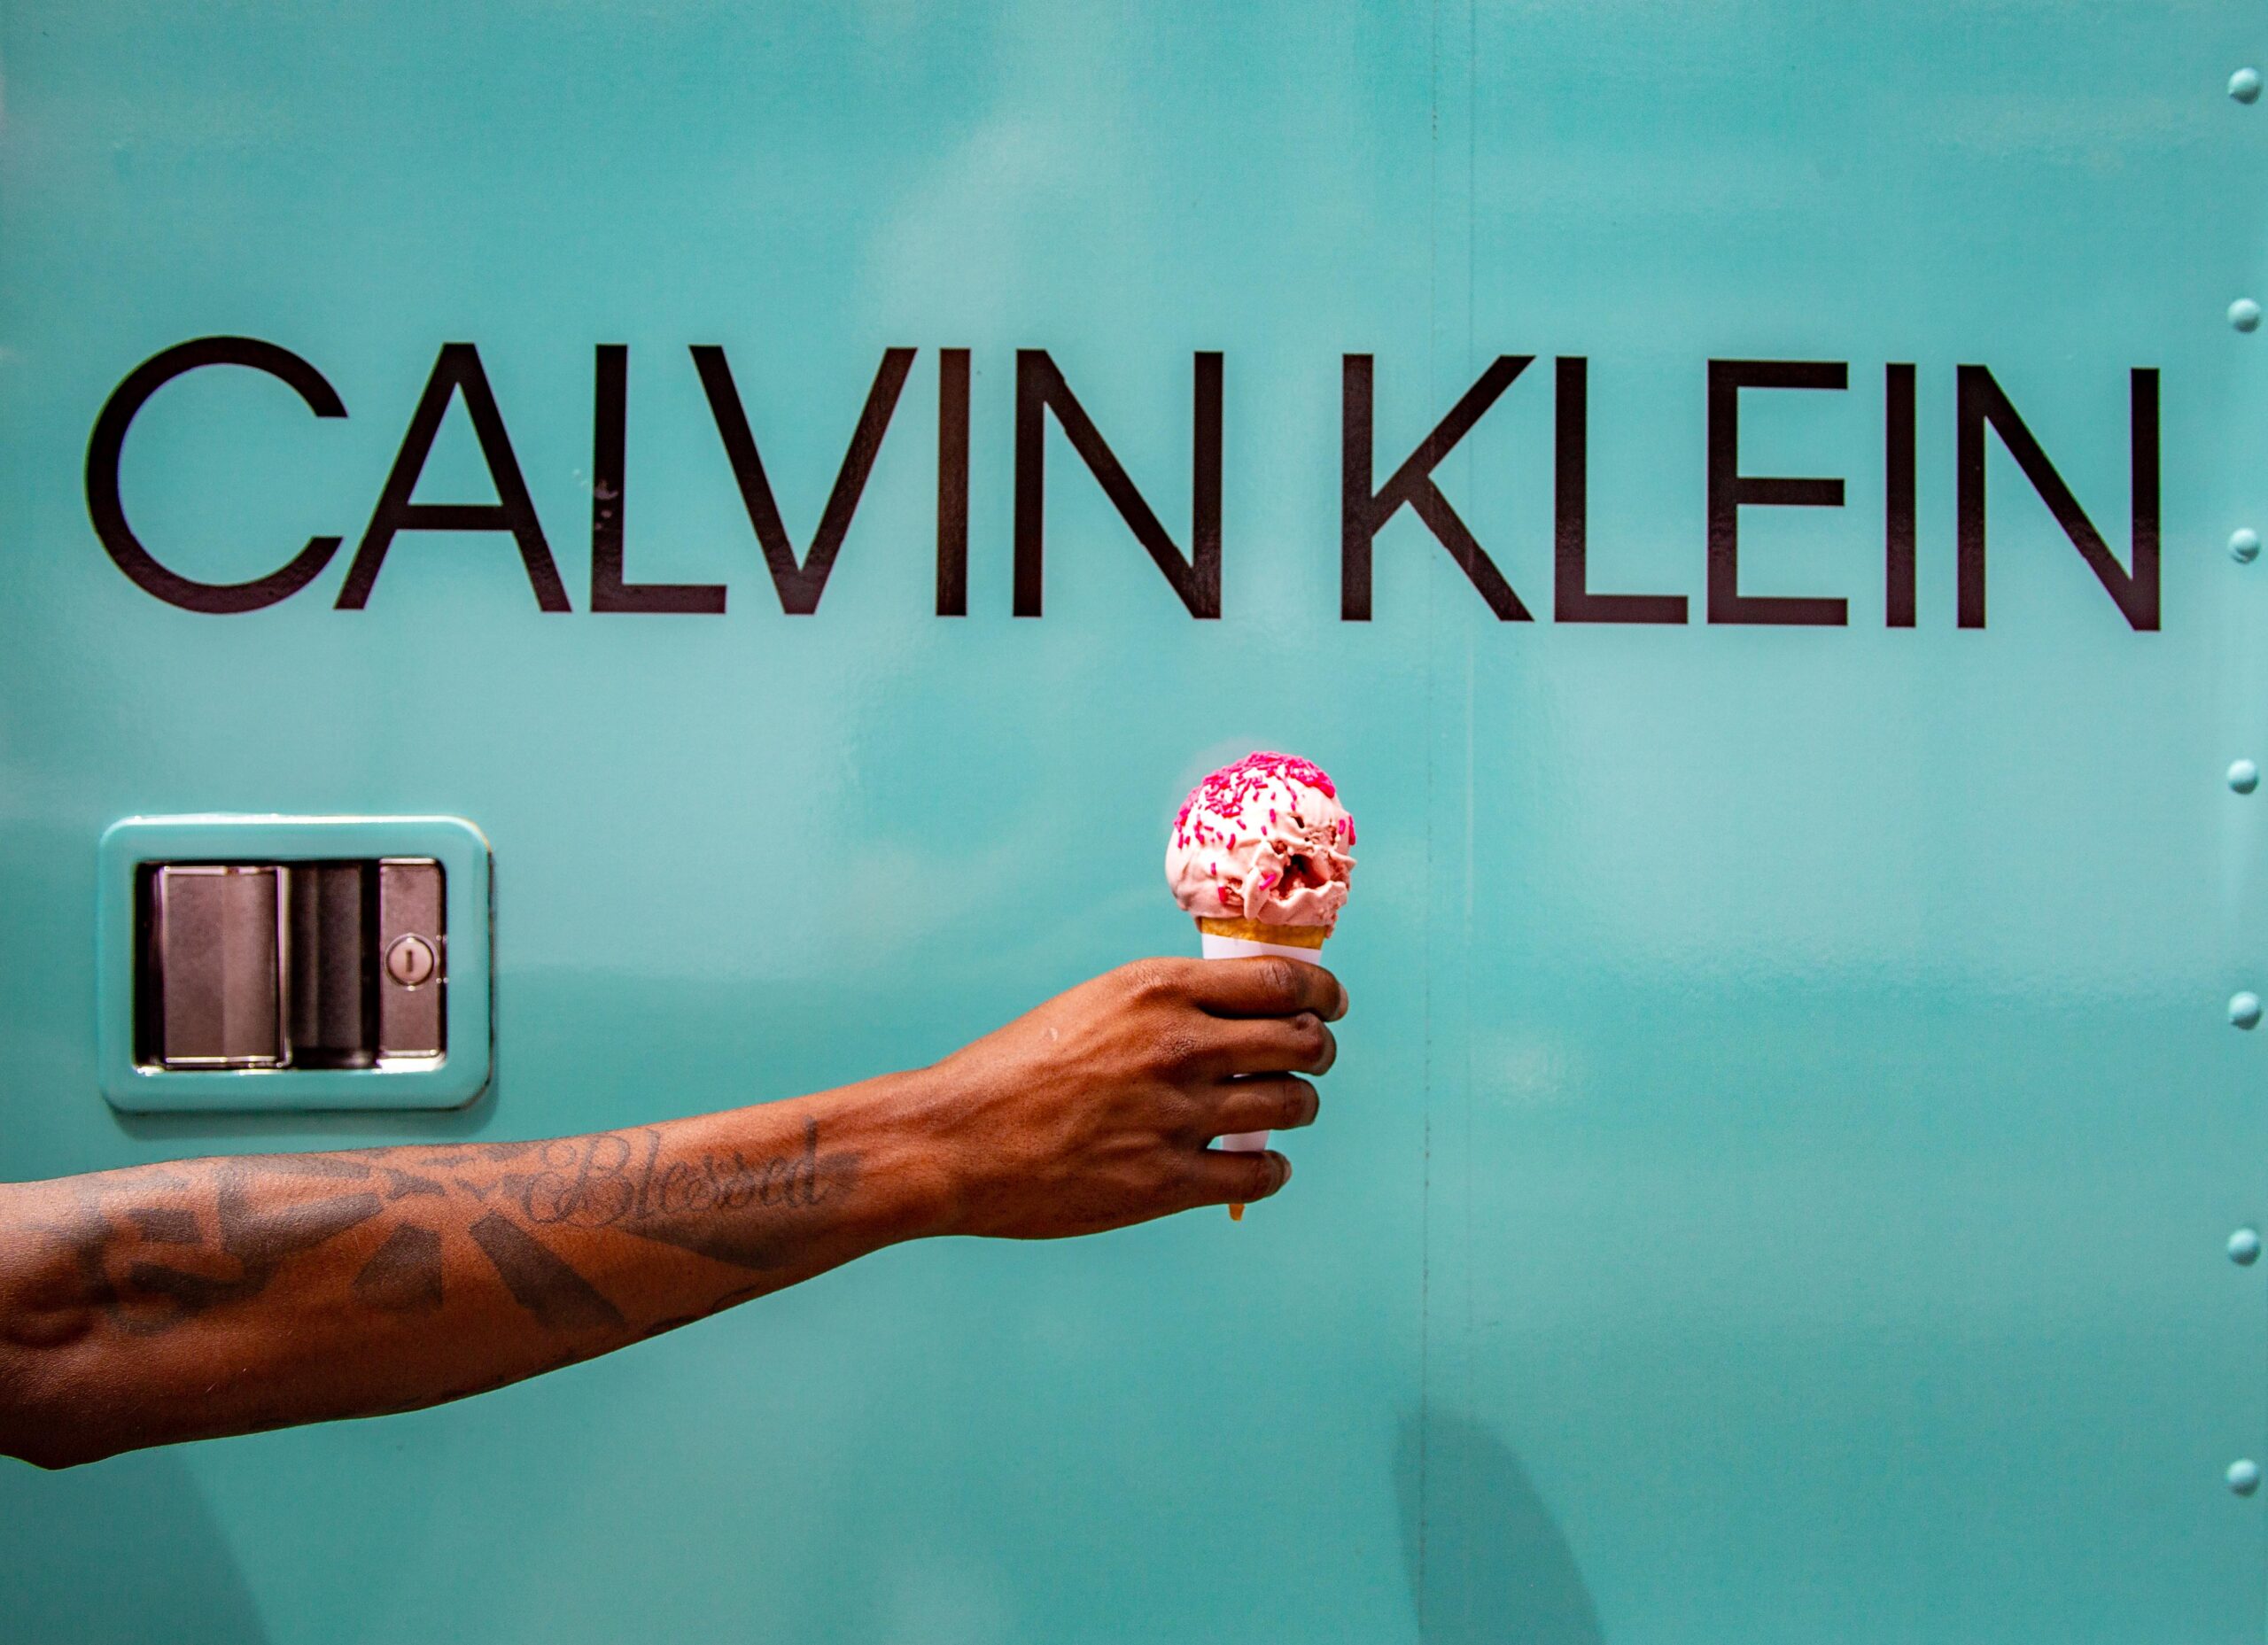 Calvin Klein Sensory Marketing with Ice Cream for National Underwear Day